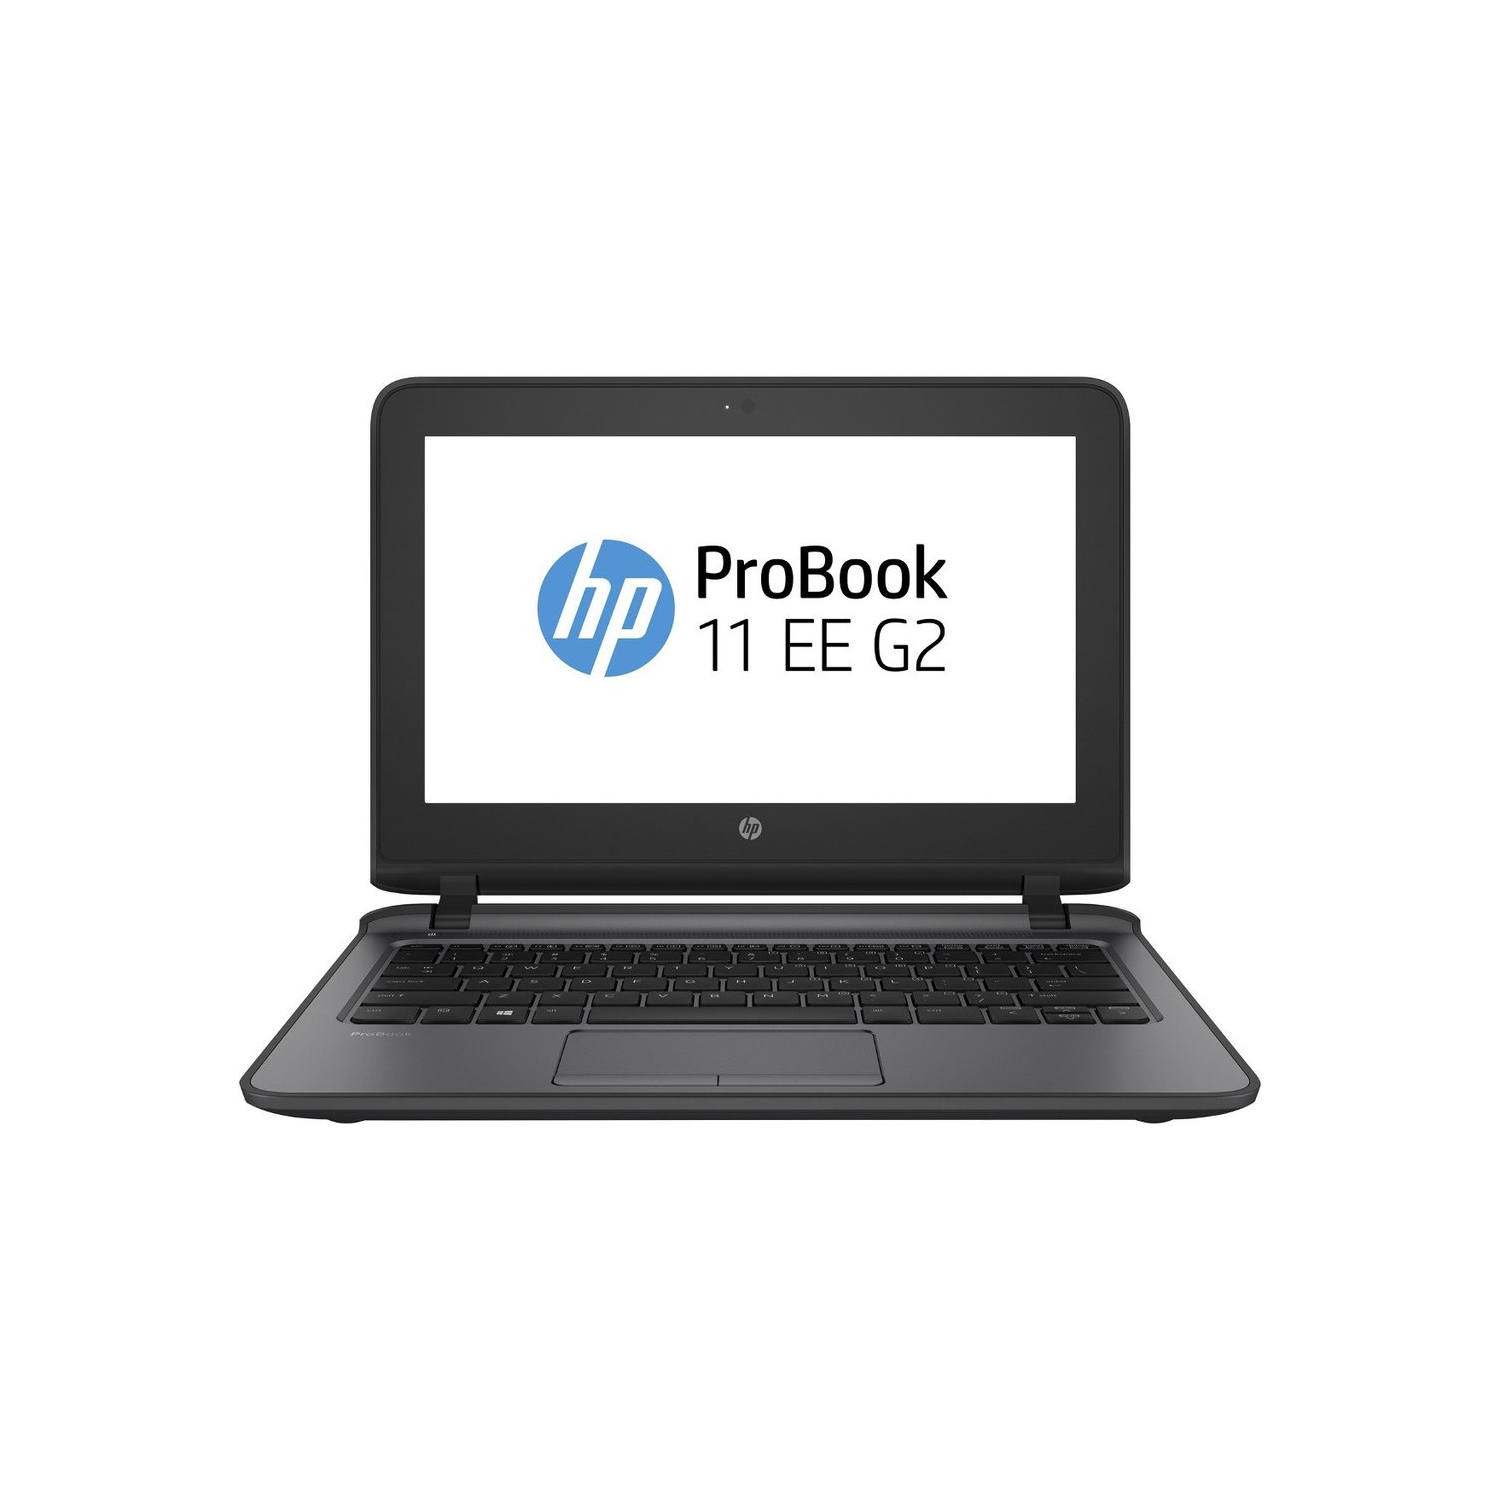 Refurbished (Good) - HP Probook 11 G2 Education Edition 11.6 inch Notebook: Intel i3 6100U, 8GB RAM, 128GB SSD, Webcam, Win 10 Pro "â€œ